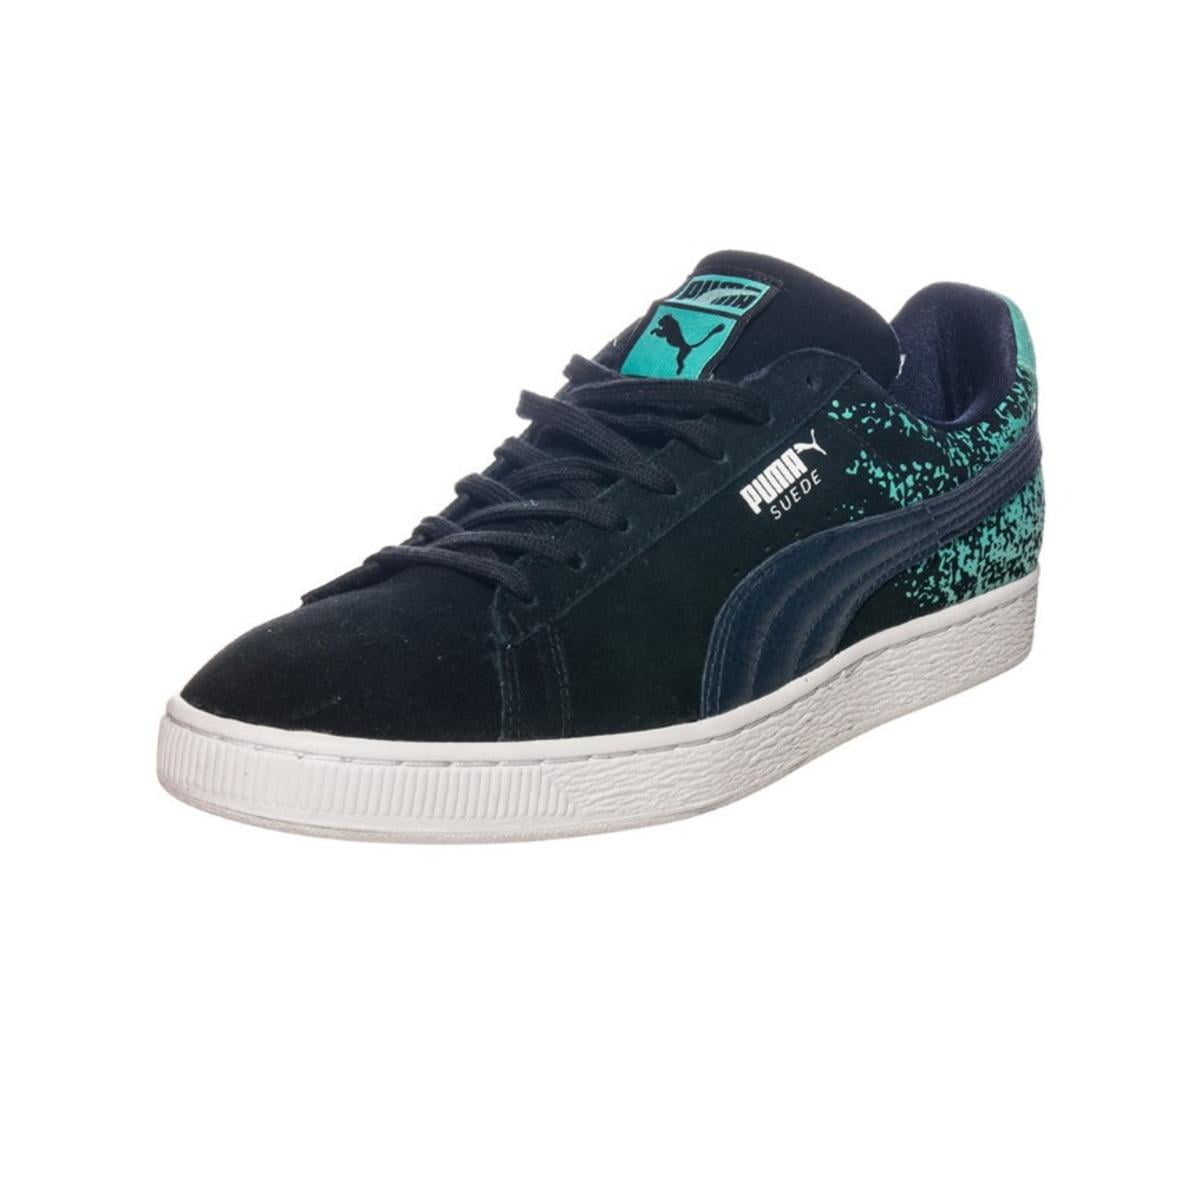 Puma Suede XS850 Mens Black Sneakers - Walmart.com